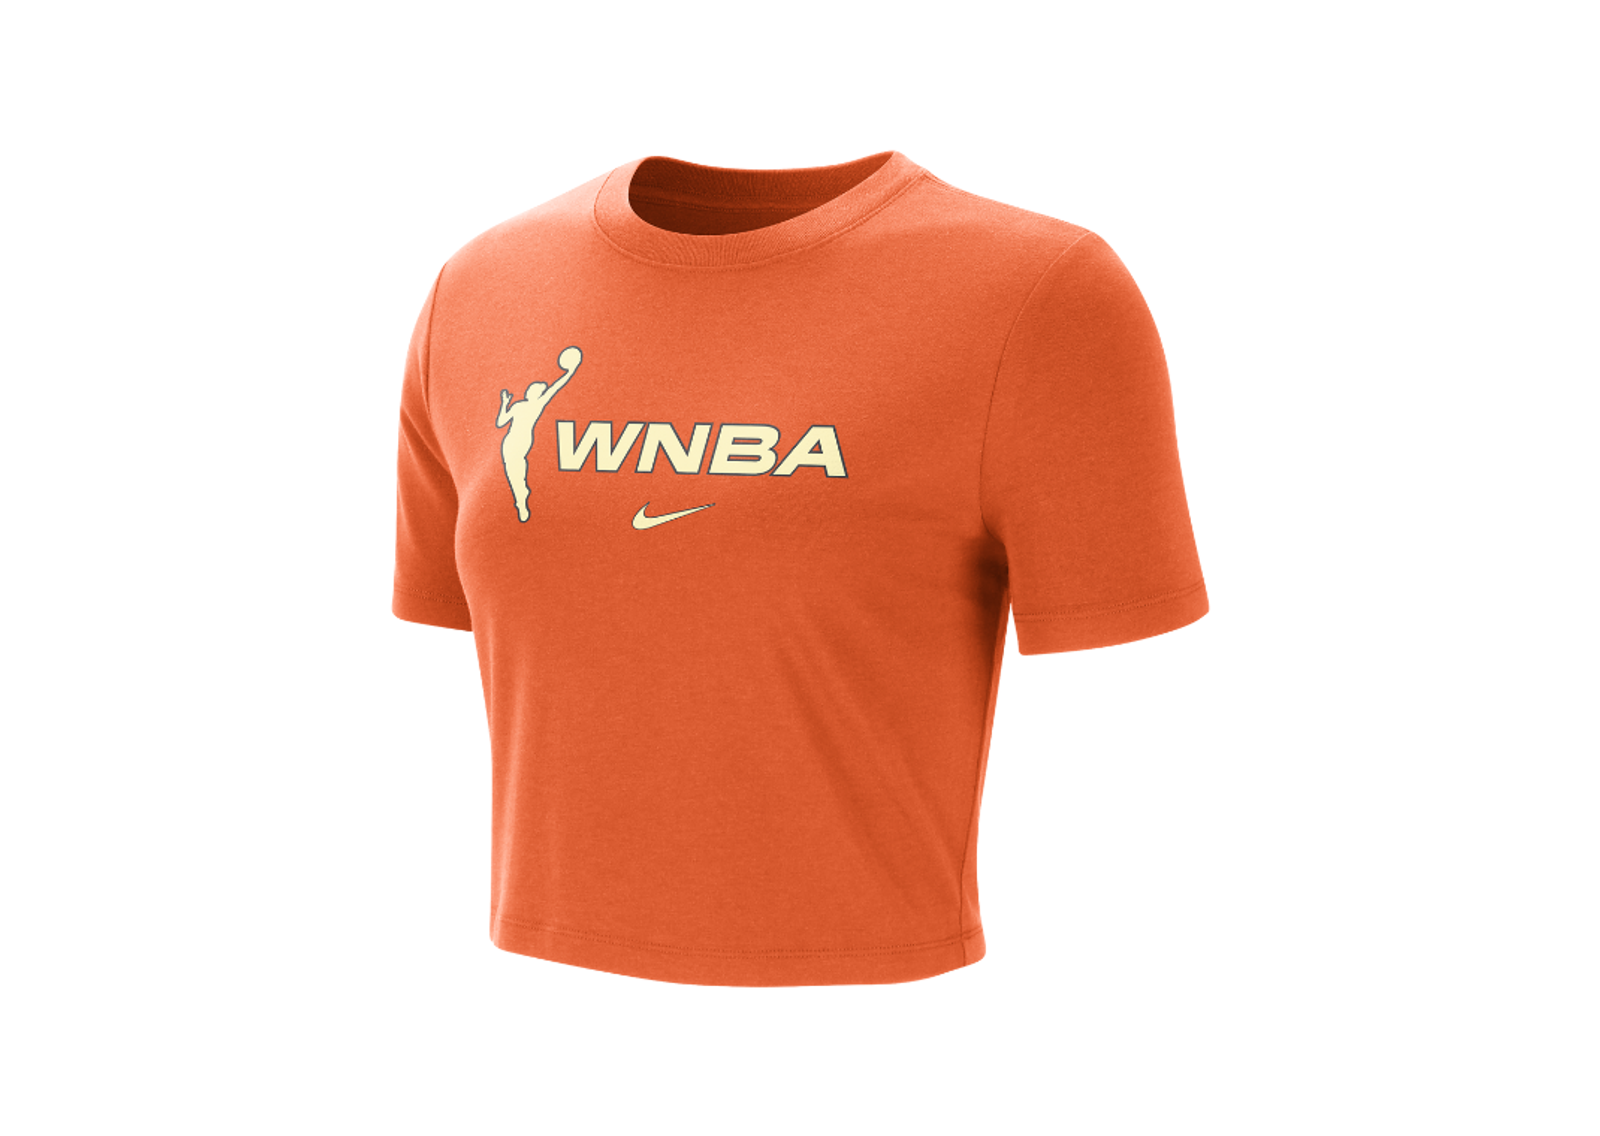 Team 13 Women's Nike WNBA Crop T-Shirt